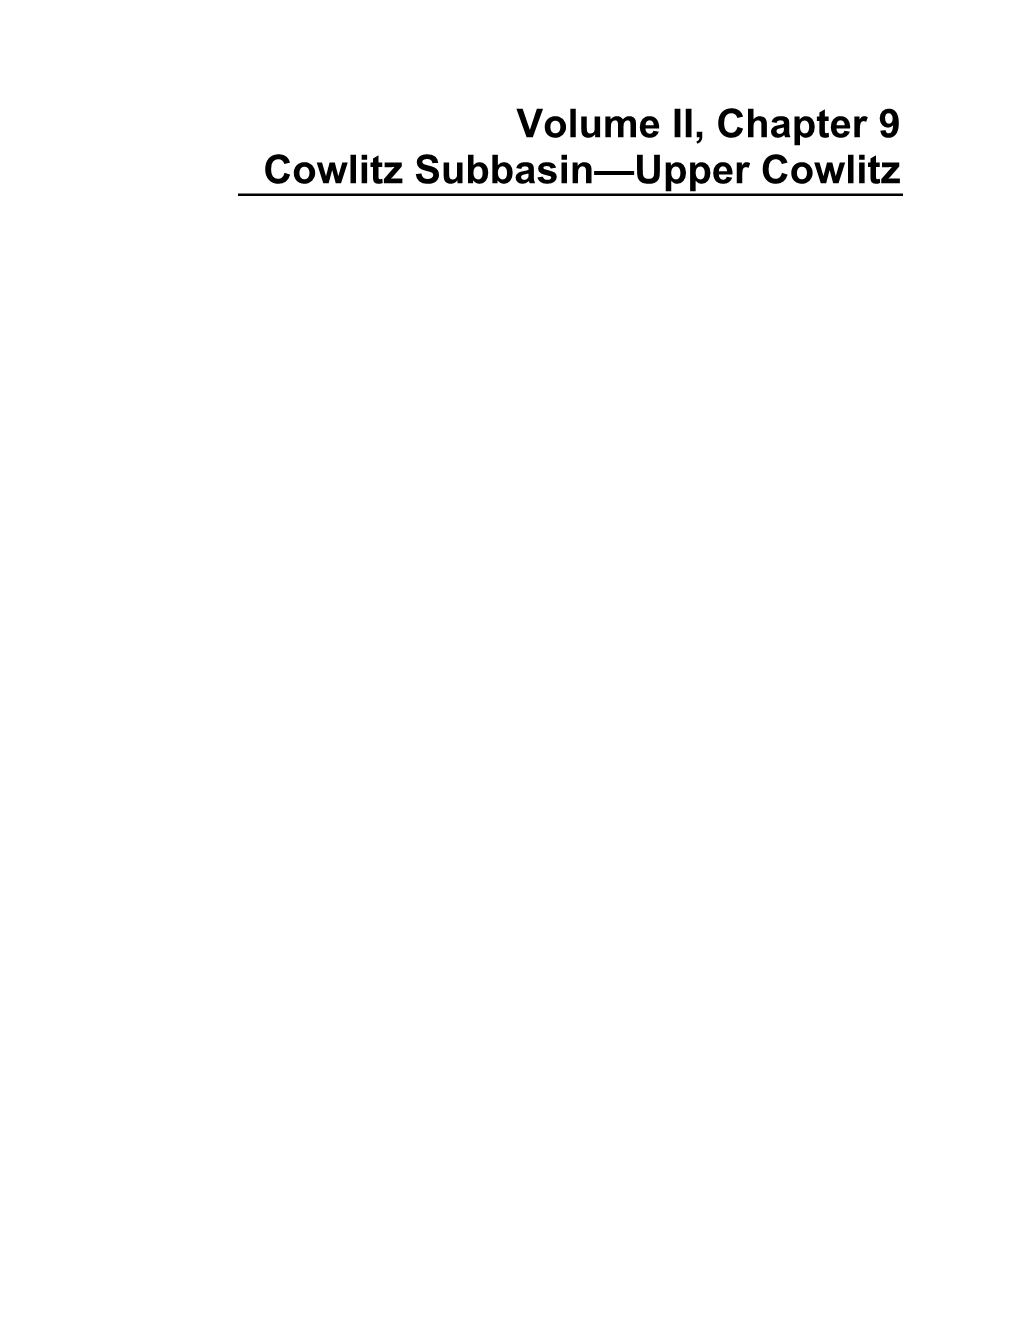 Volume II, Chapter 9 Cowlitz Subbasin—Upper Cowlitz